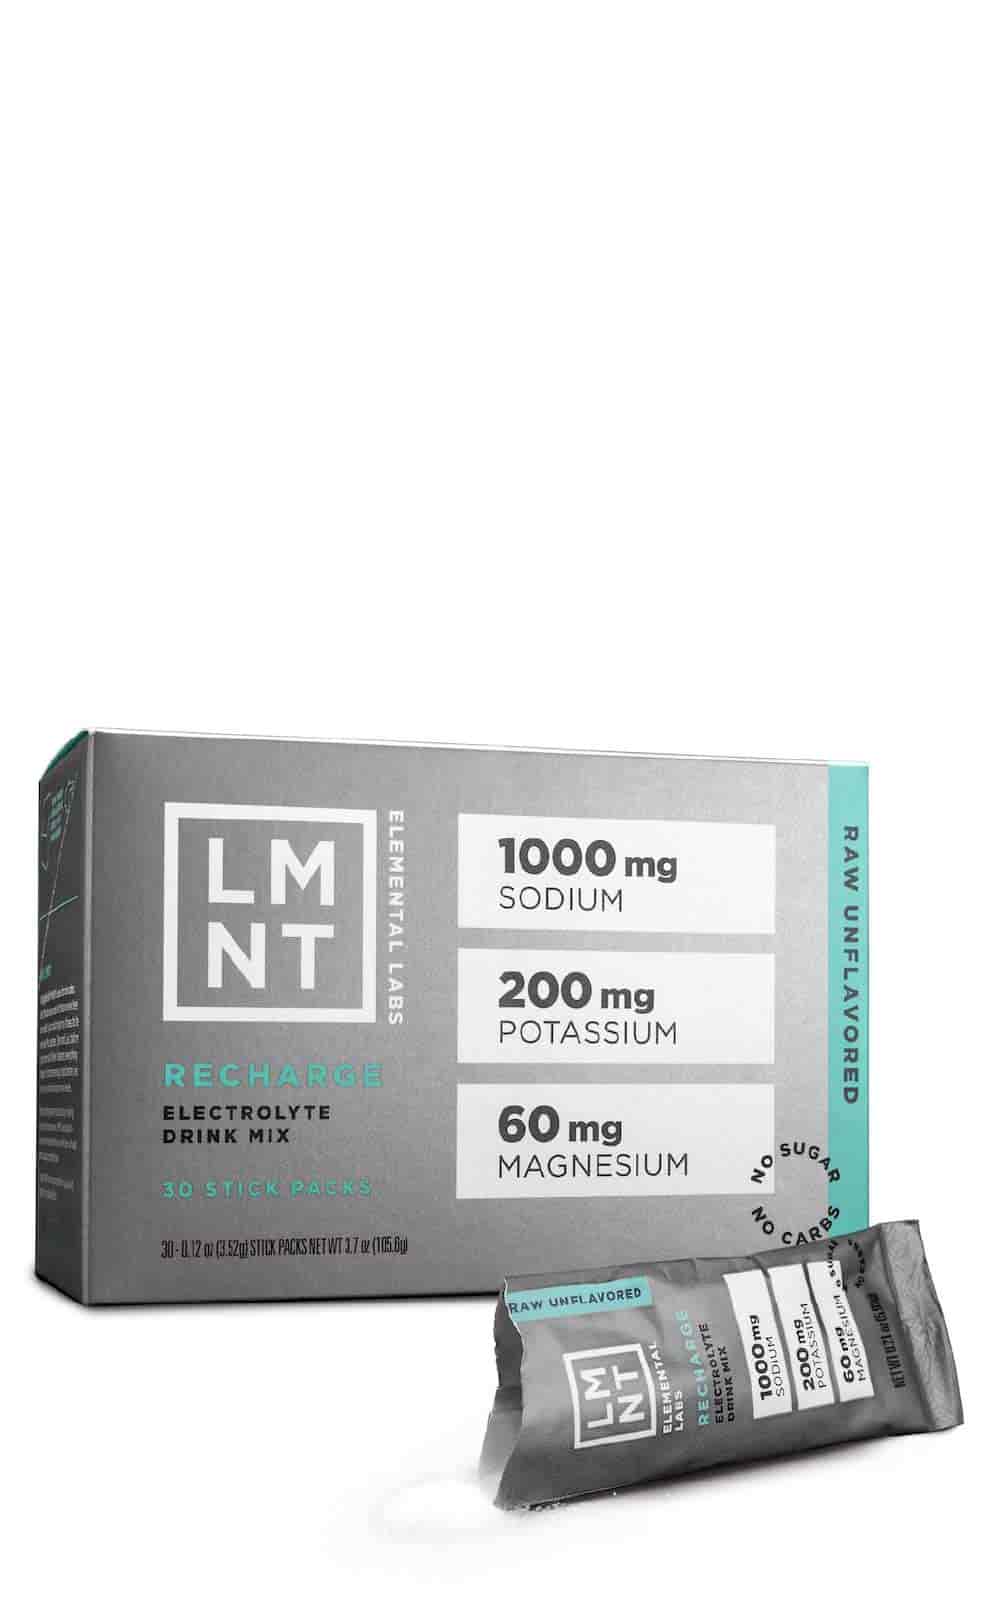 Acheter  LMNT Recharge Electrolyte Drink Mix Raw Unflavored chez LiveHelfi